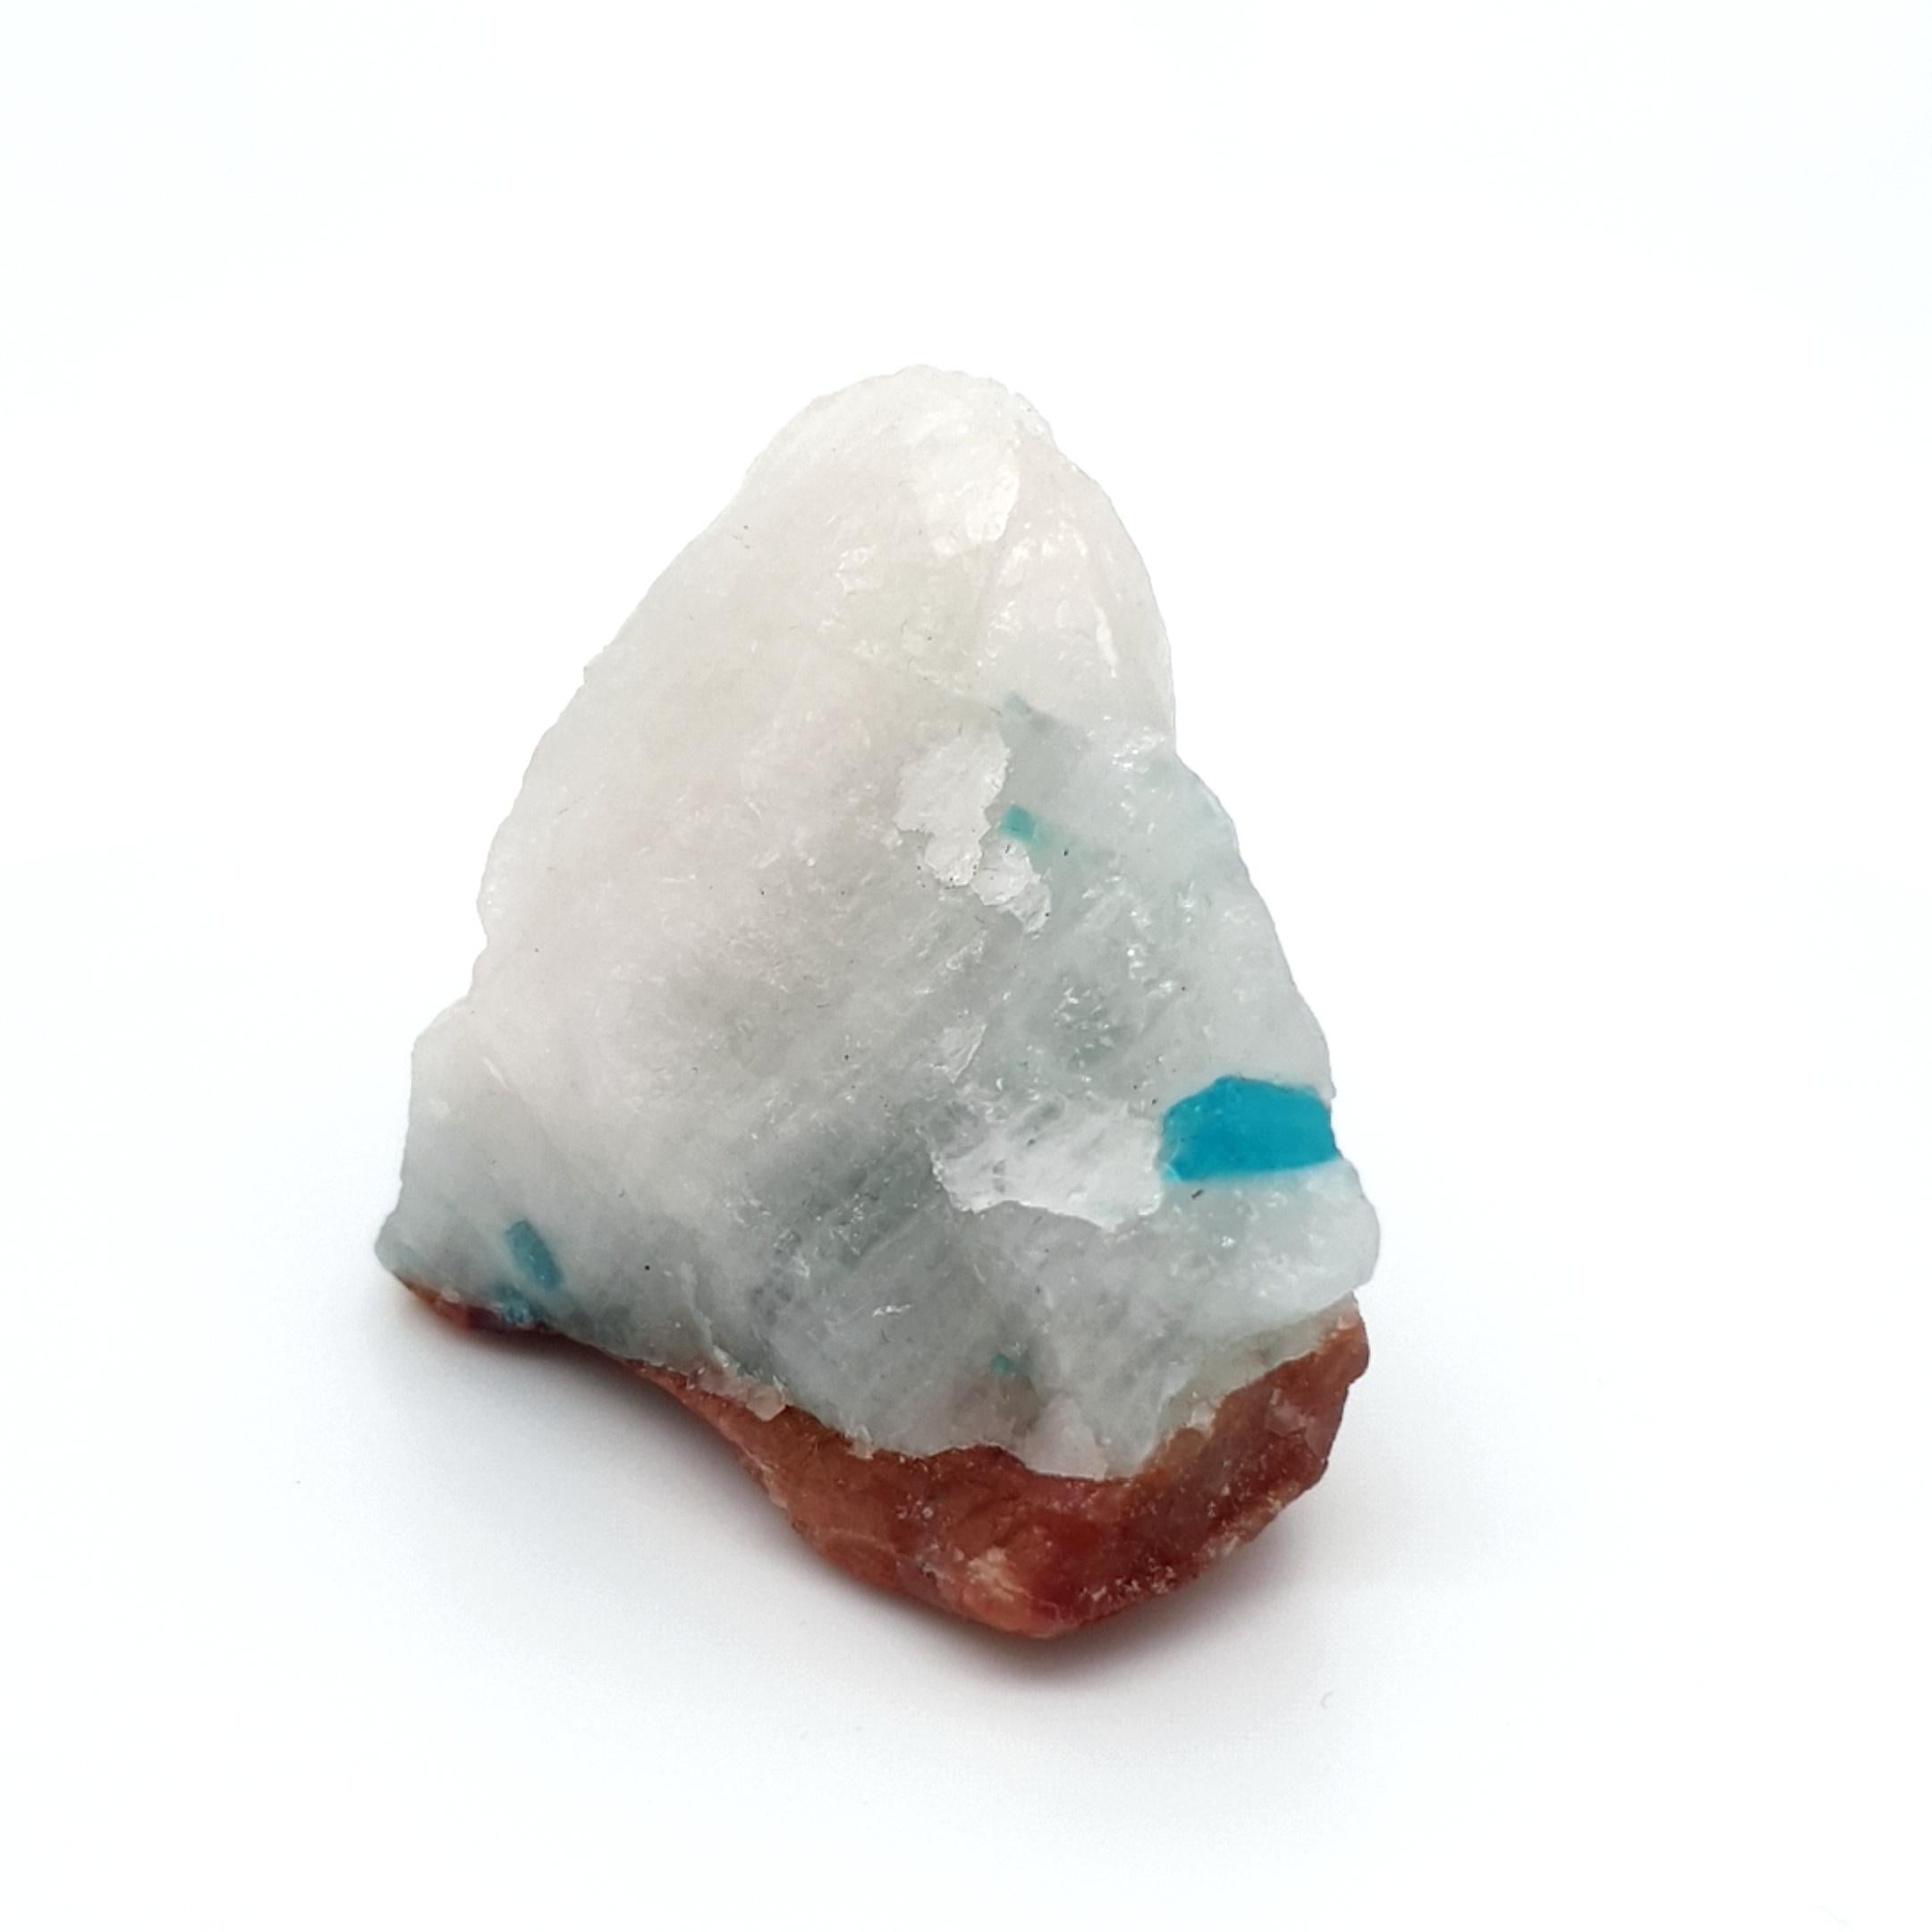 Arts and Crafts Paraiba Tourmaline Crystal in Matrix, Mineral Specimen